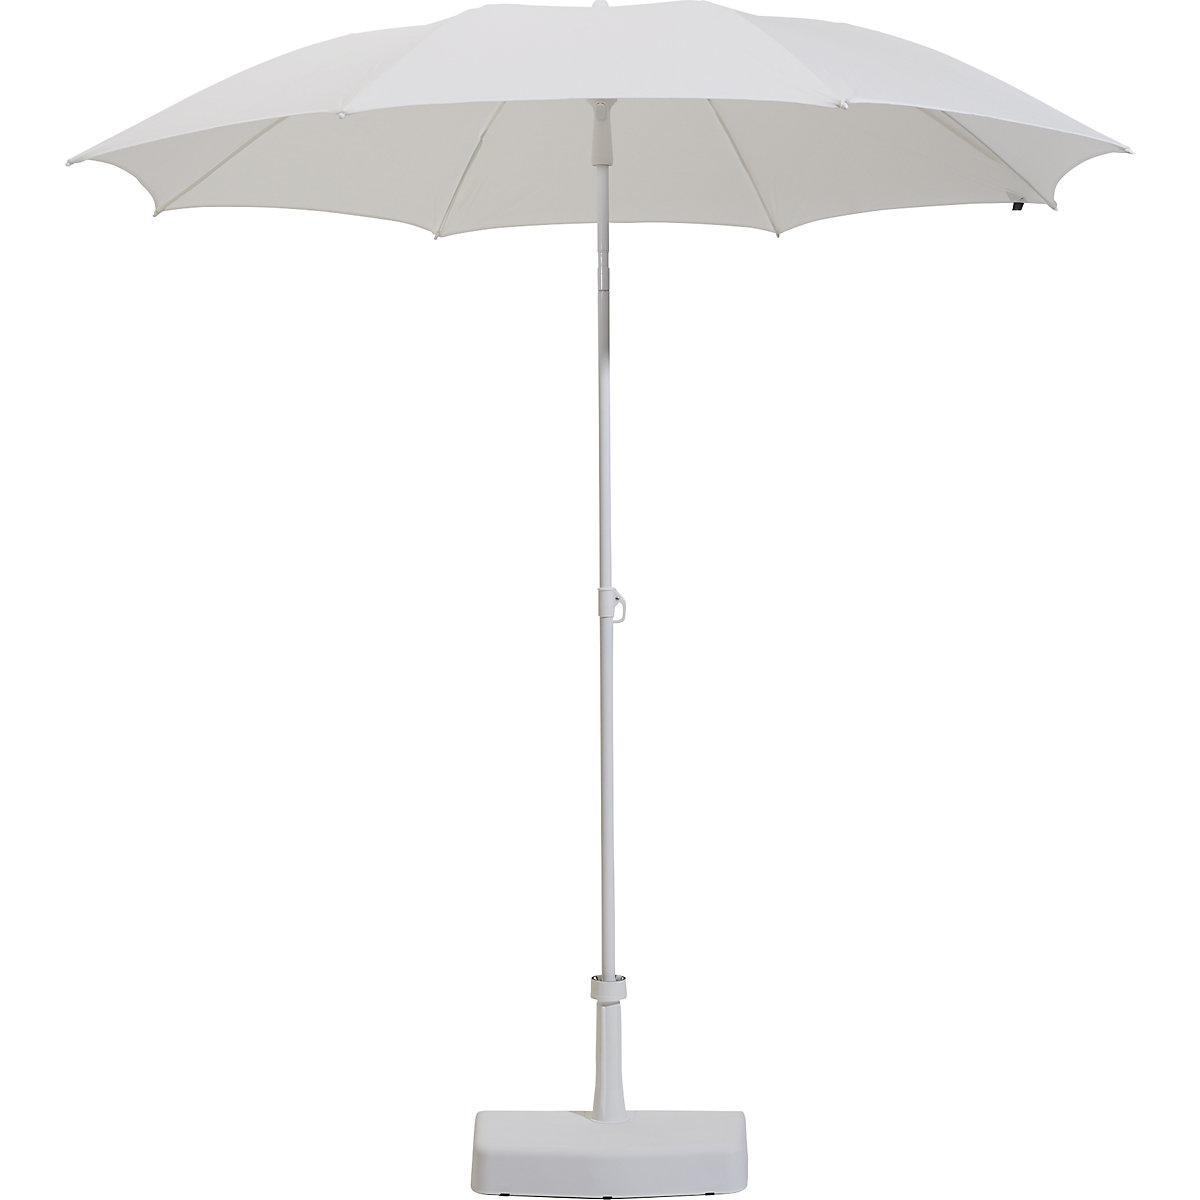 Parasol, round design, Ø 2000 mm, white frame, white